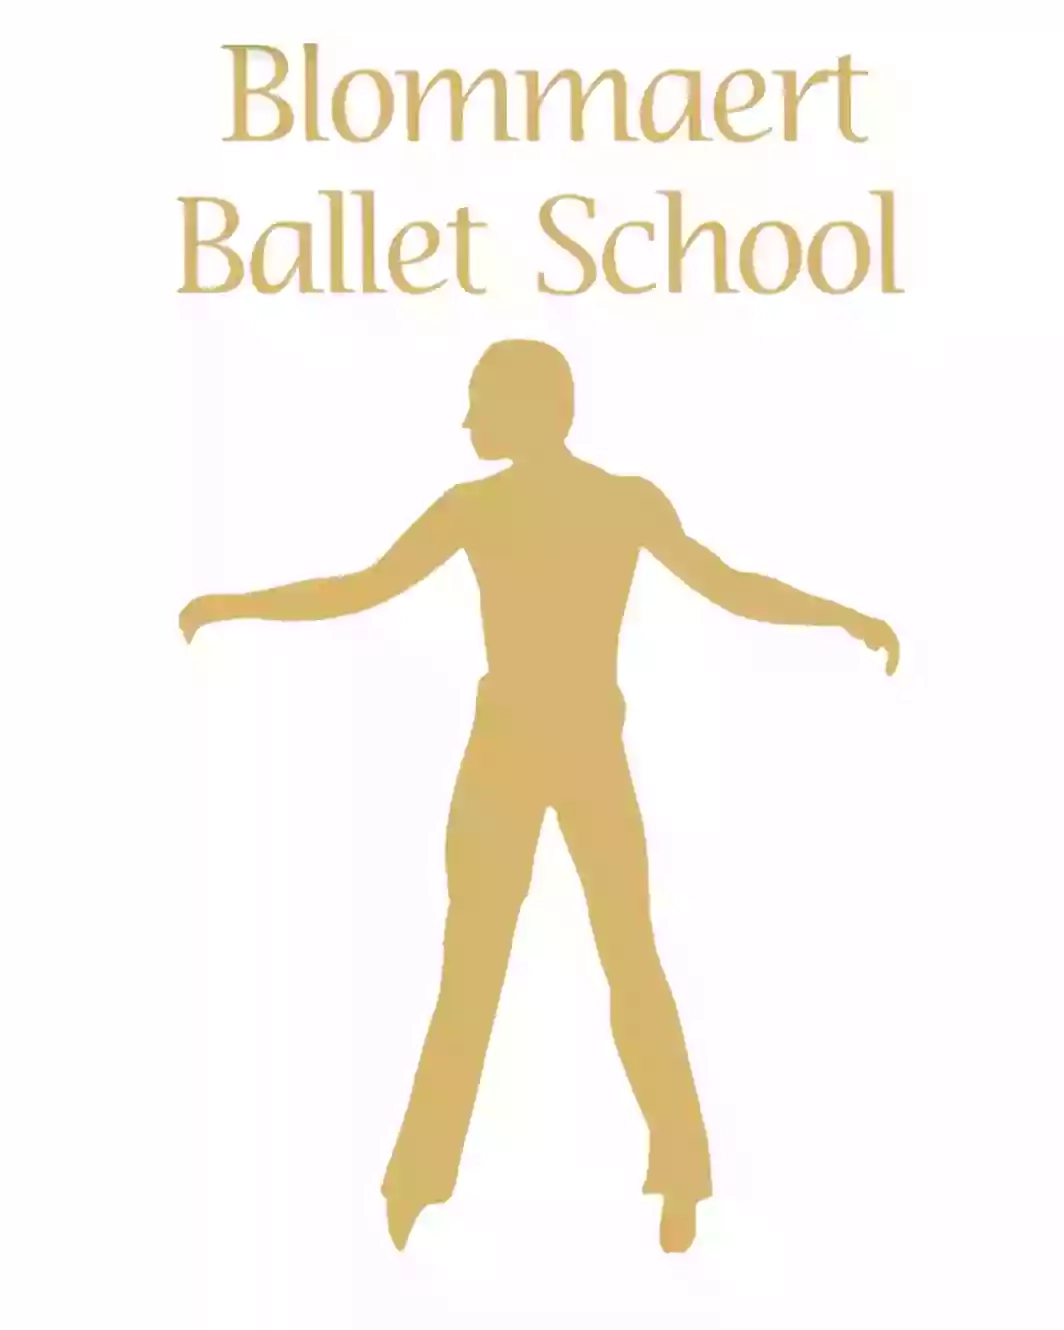 Blommaert Ballet School